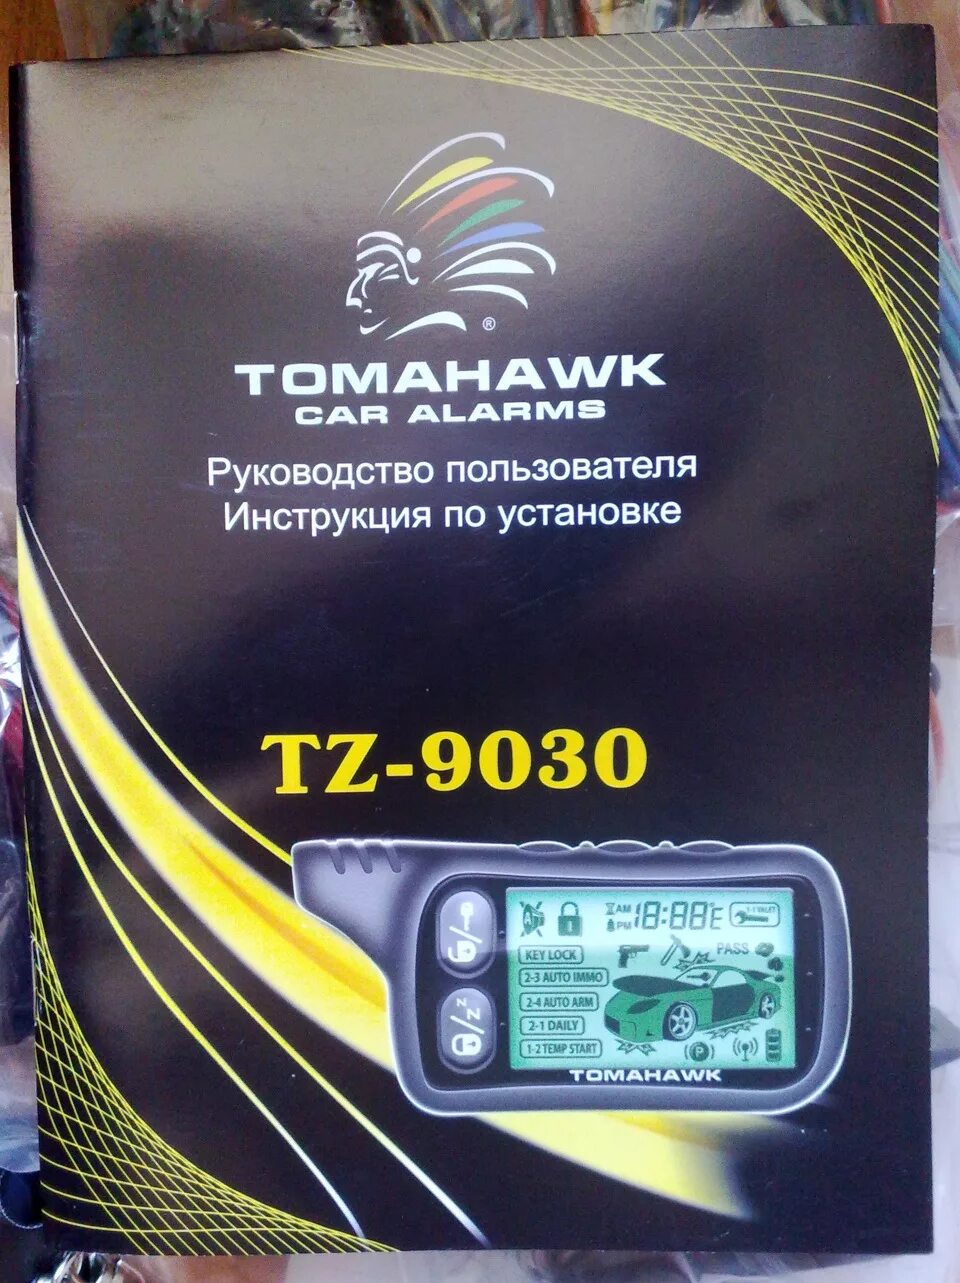 Томагавк TZ 9030. Сигнализация Tomahawk 9030. Сигнализация томагавк TZ 9030. Tomahawk TZ-9031.